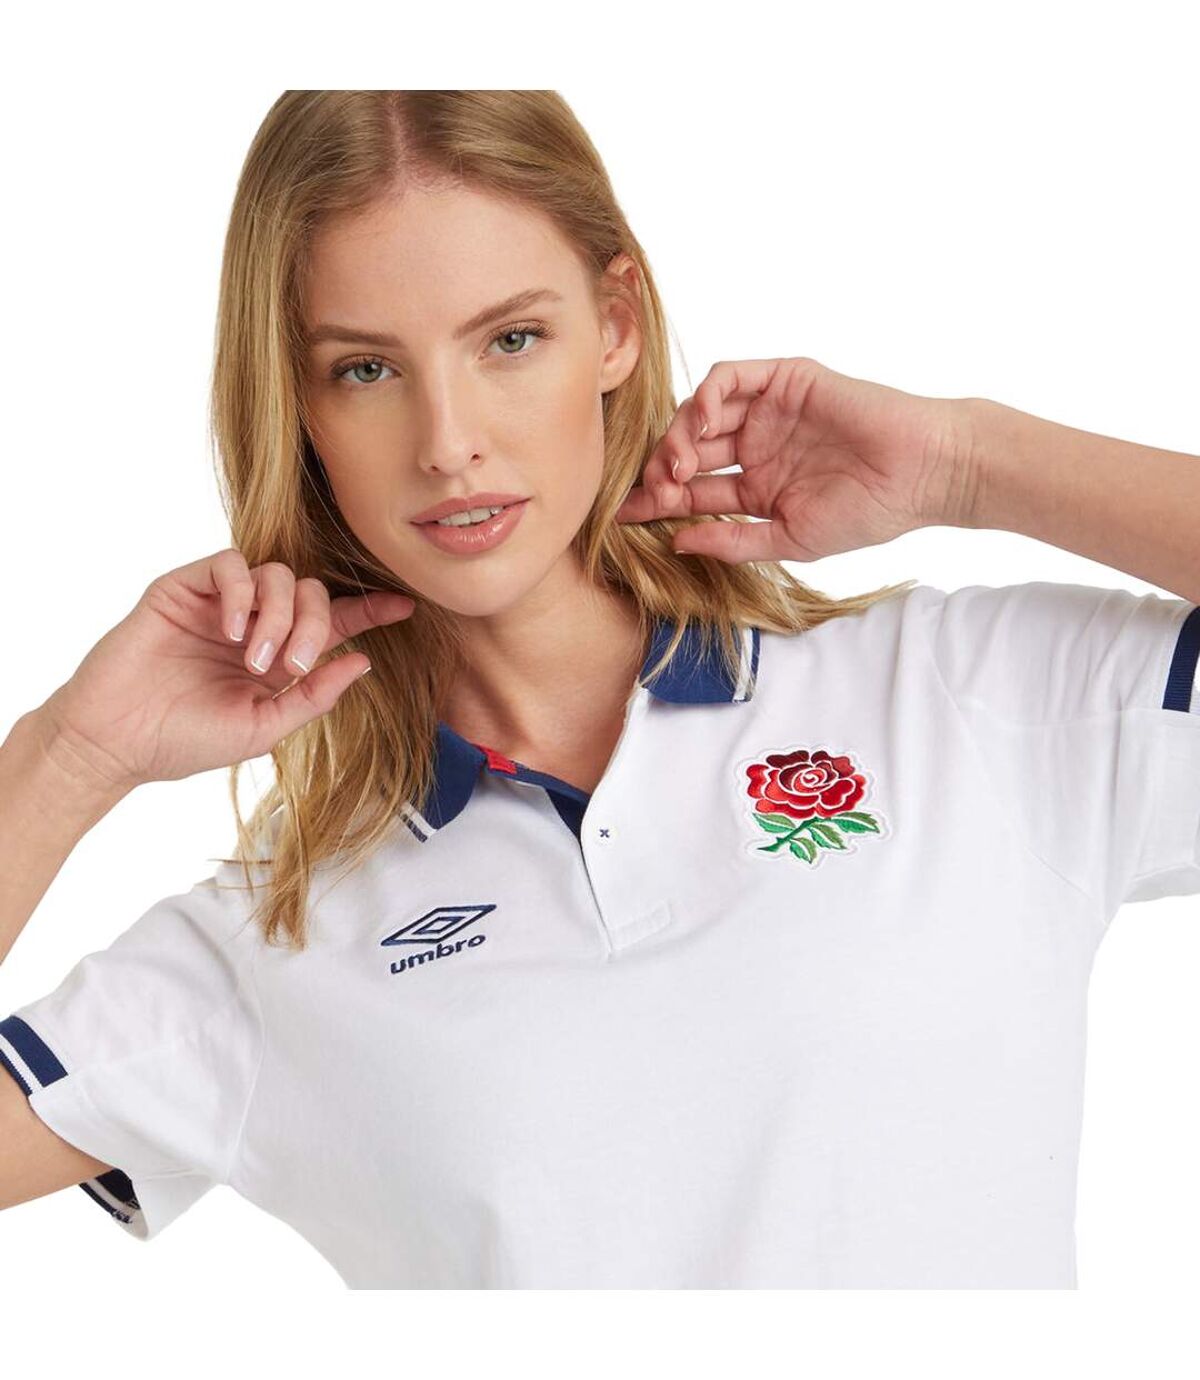 England Rugby - Robe polo CLASSIC - Femme (Blanc / Bleu marine) - UTUO936